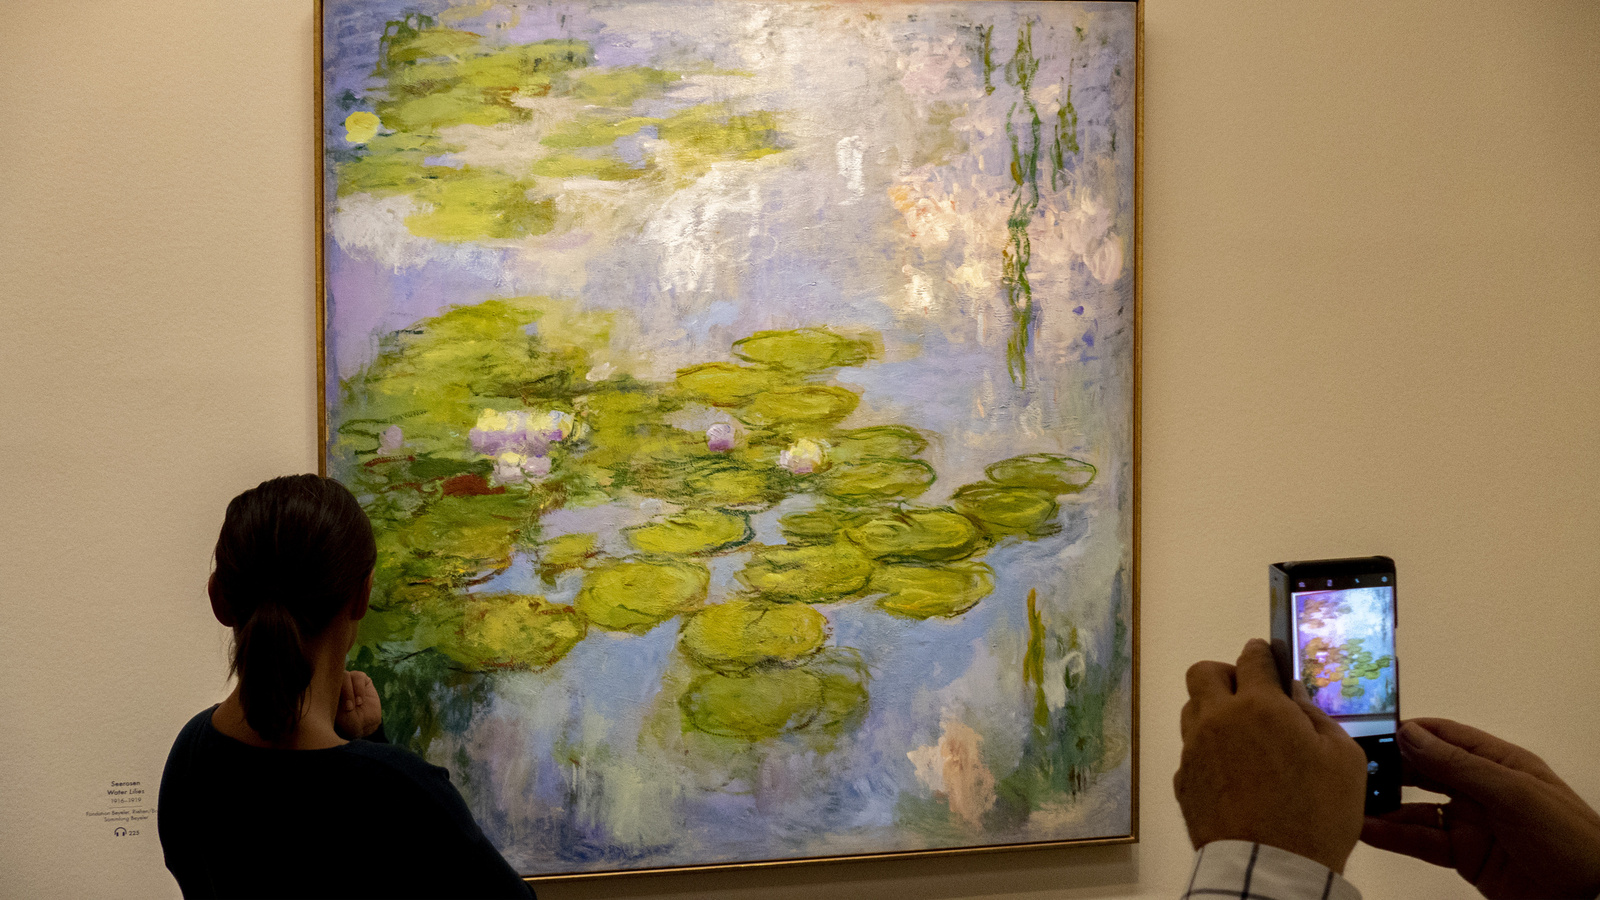 Bécs Claude Monet - Water lilies (1916-1919)